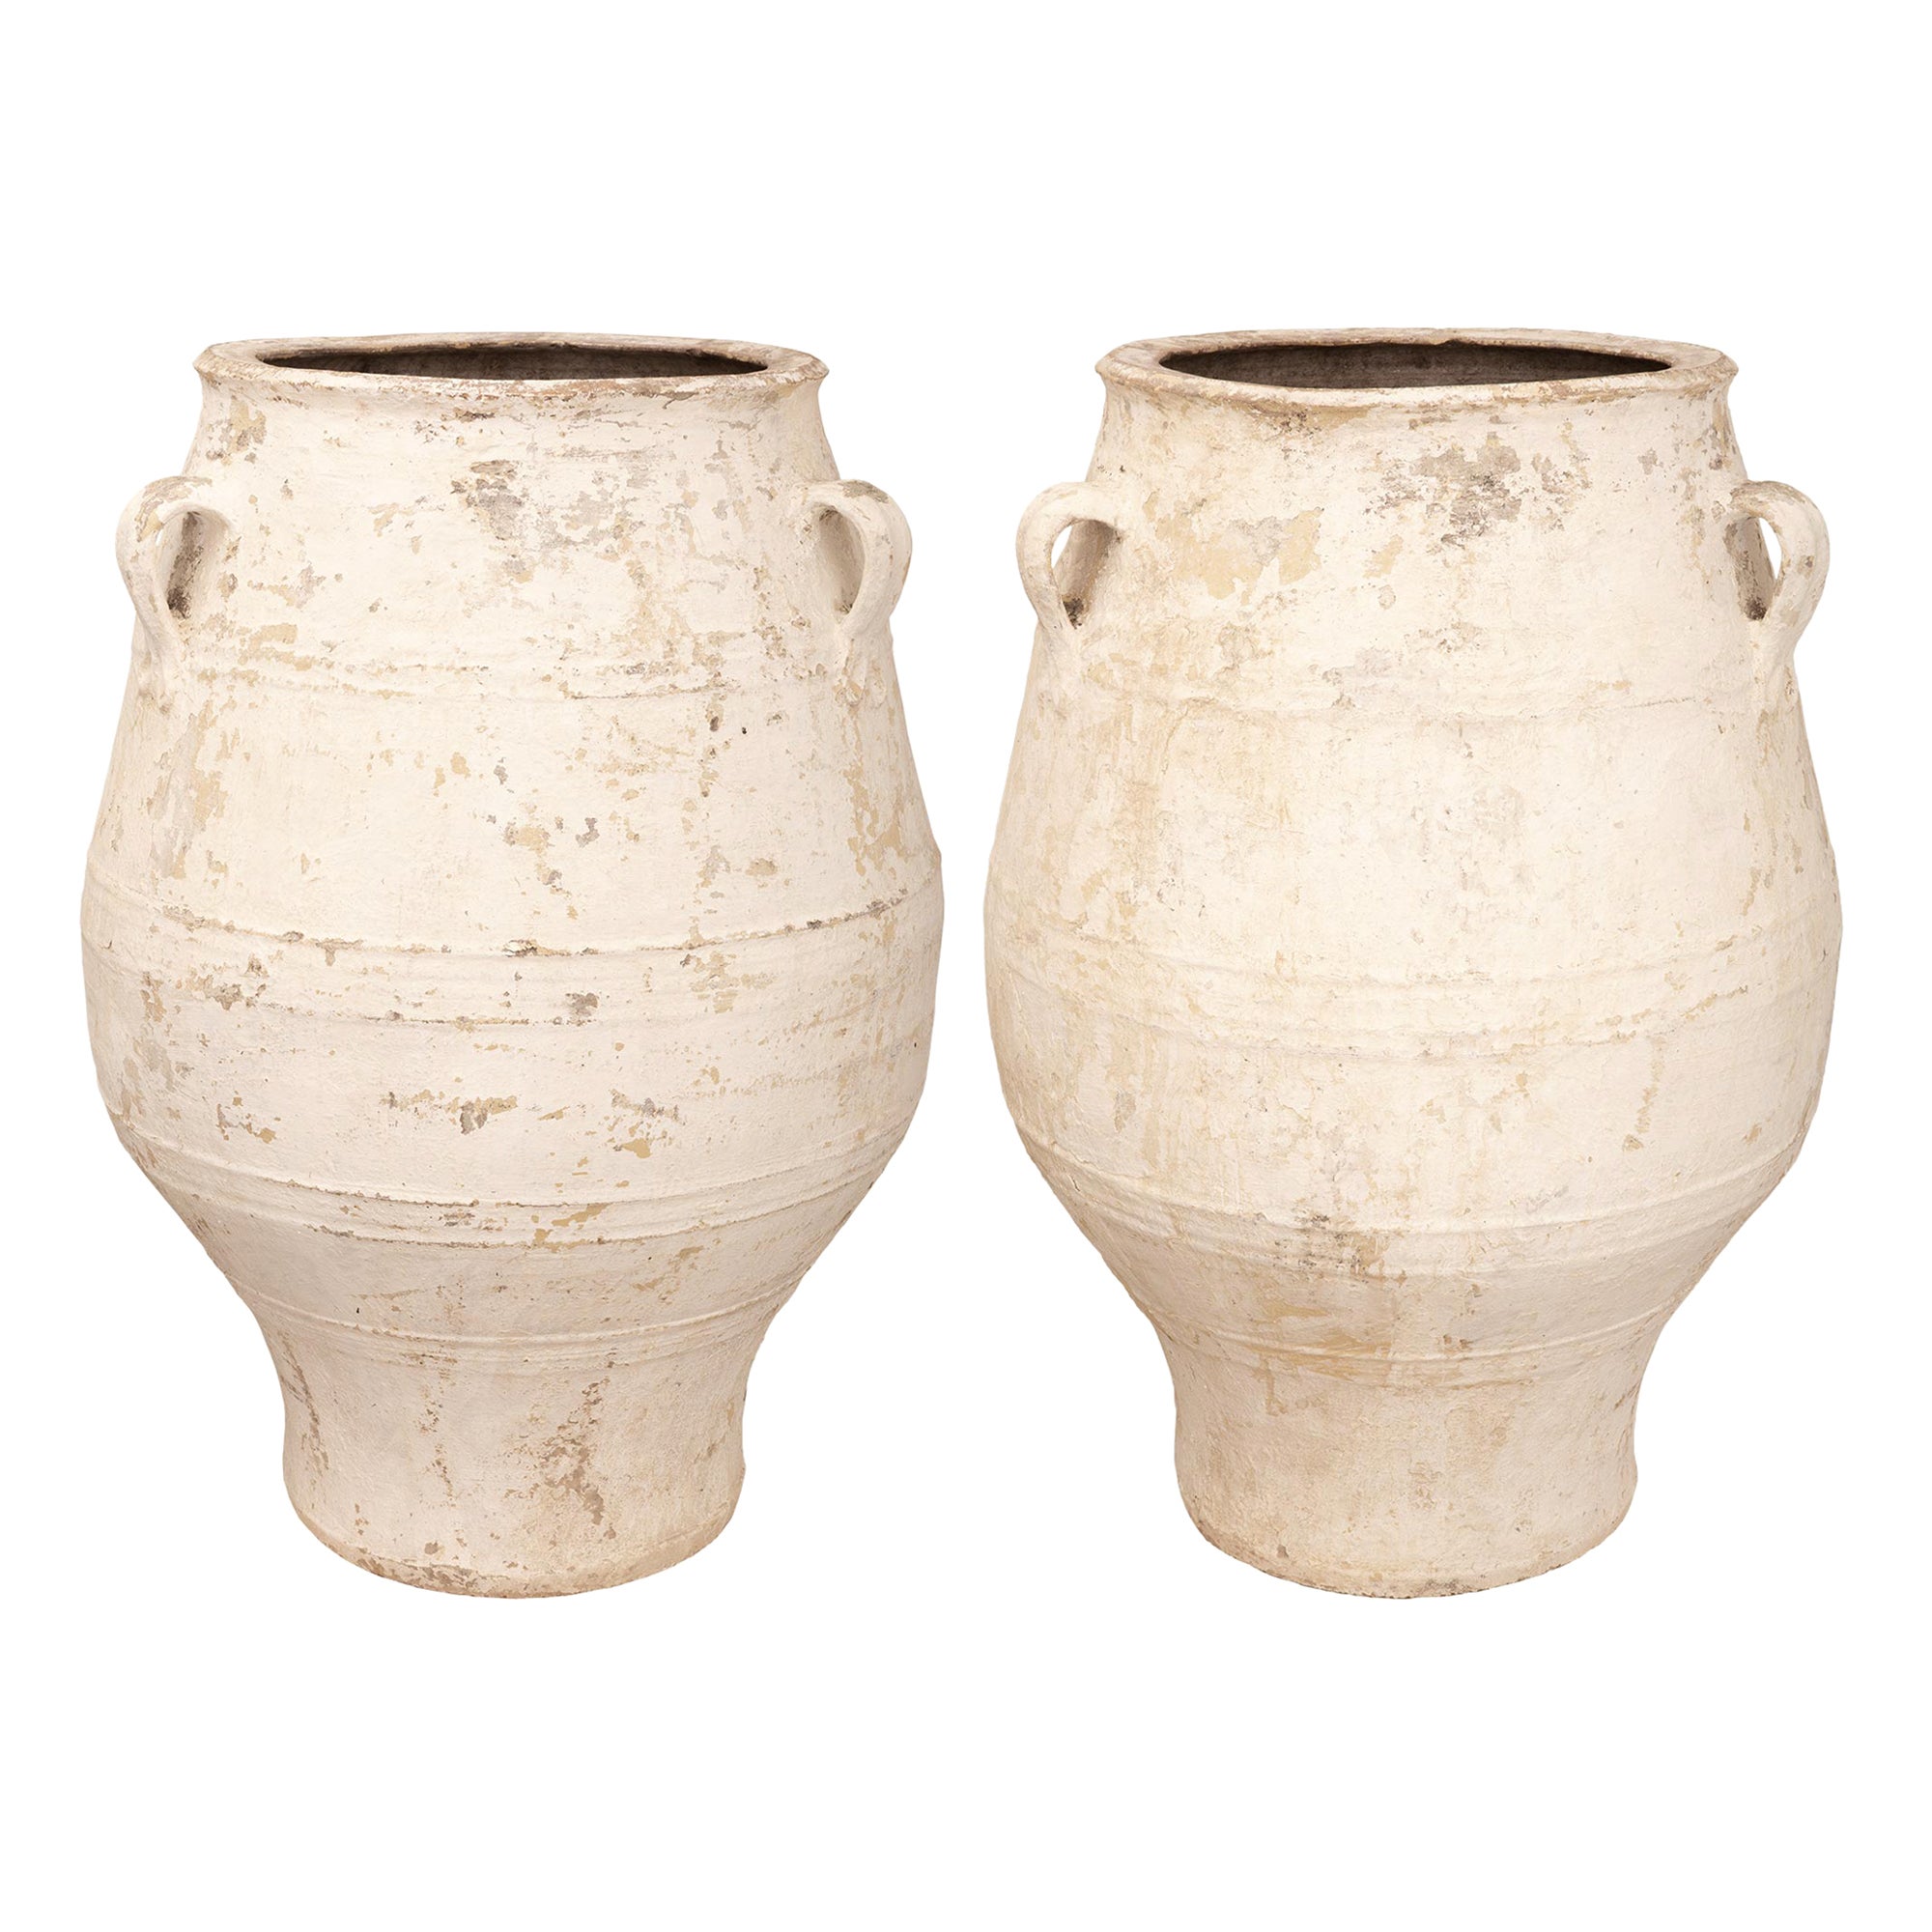 Pair of Mediterranean 19th Century Patinated Terra Cotta Olive Jars